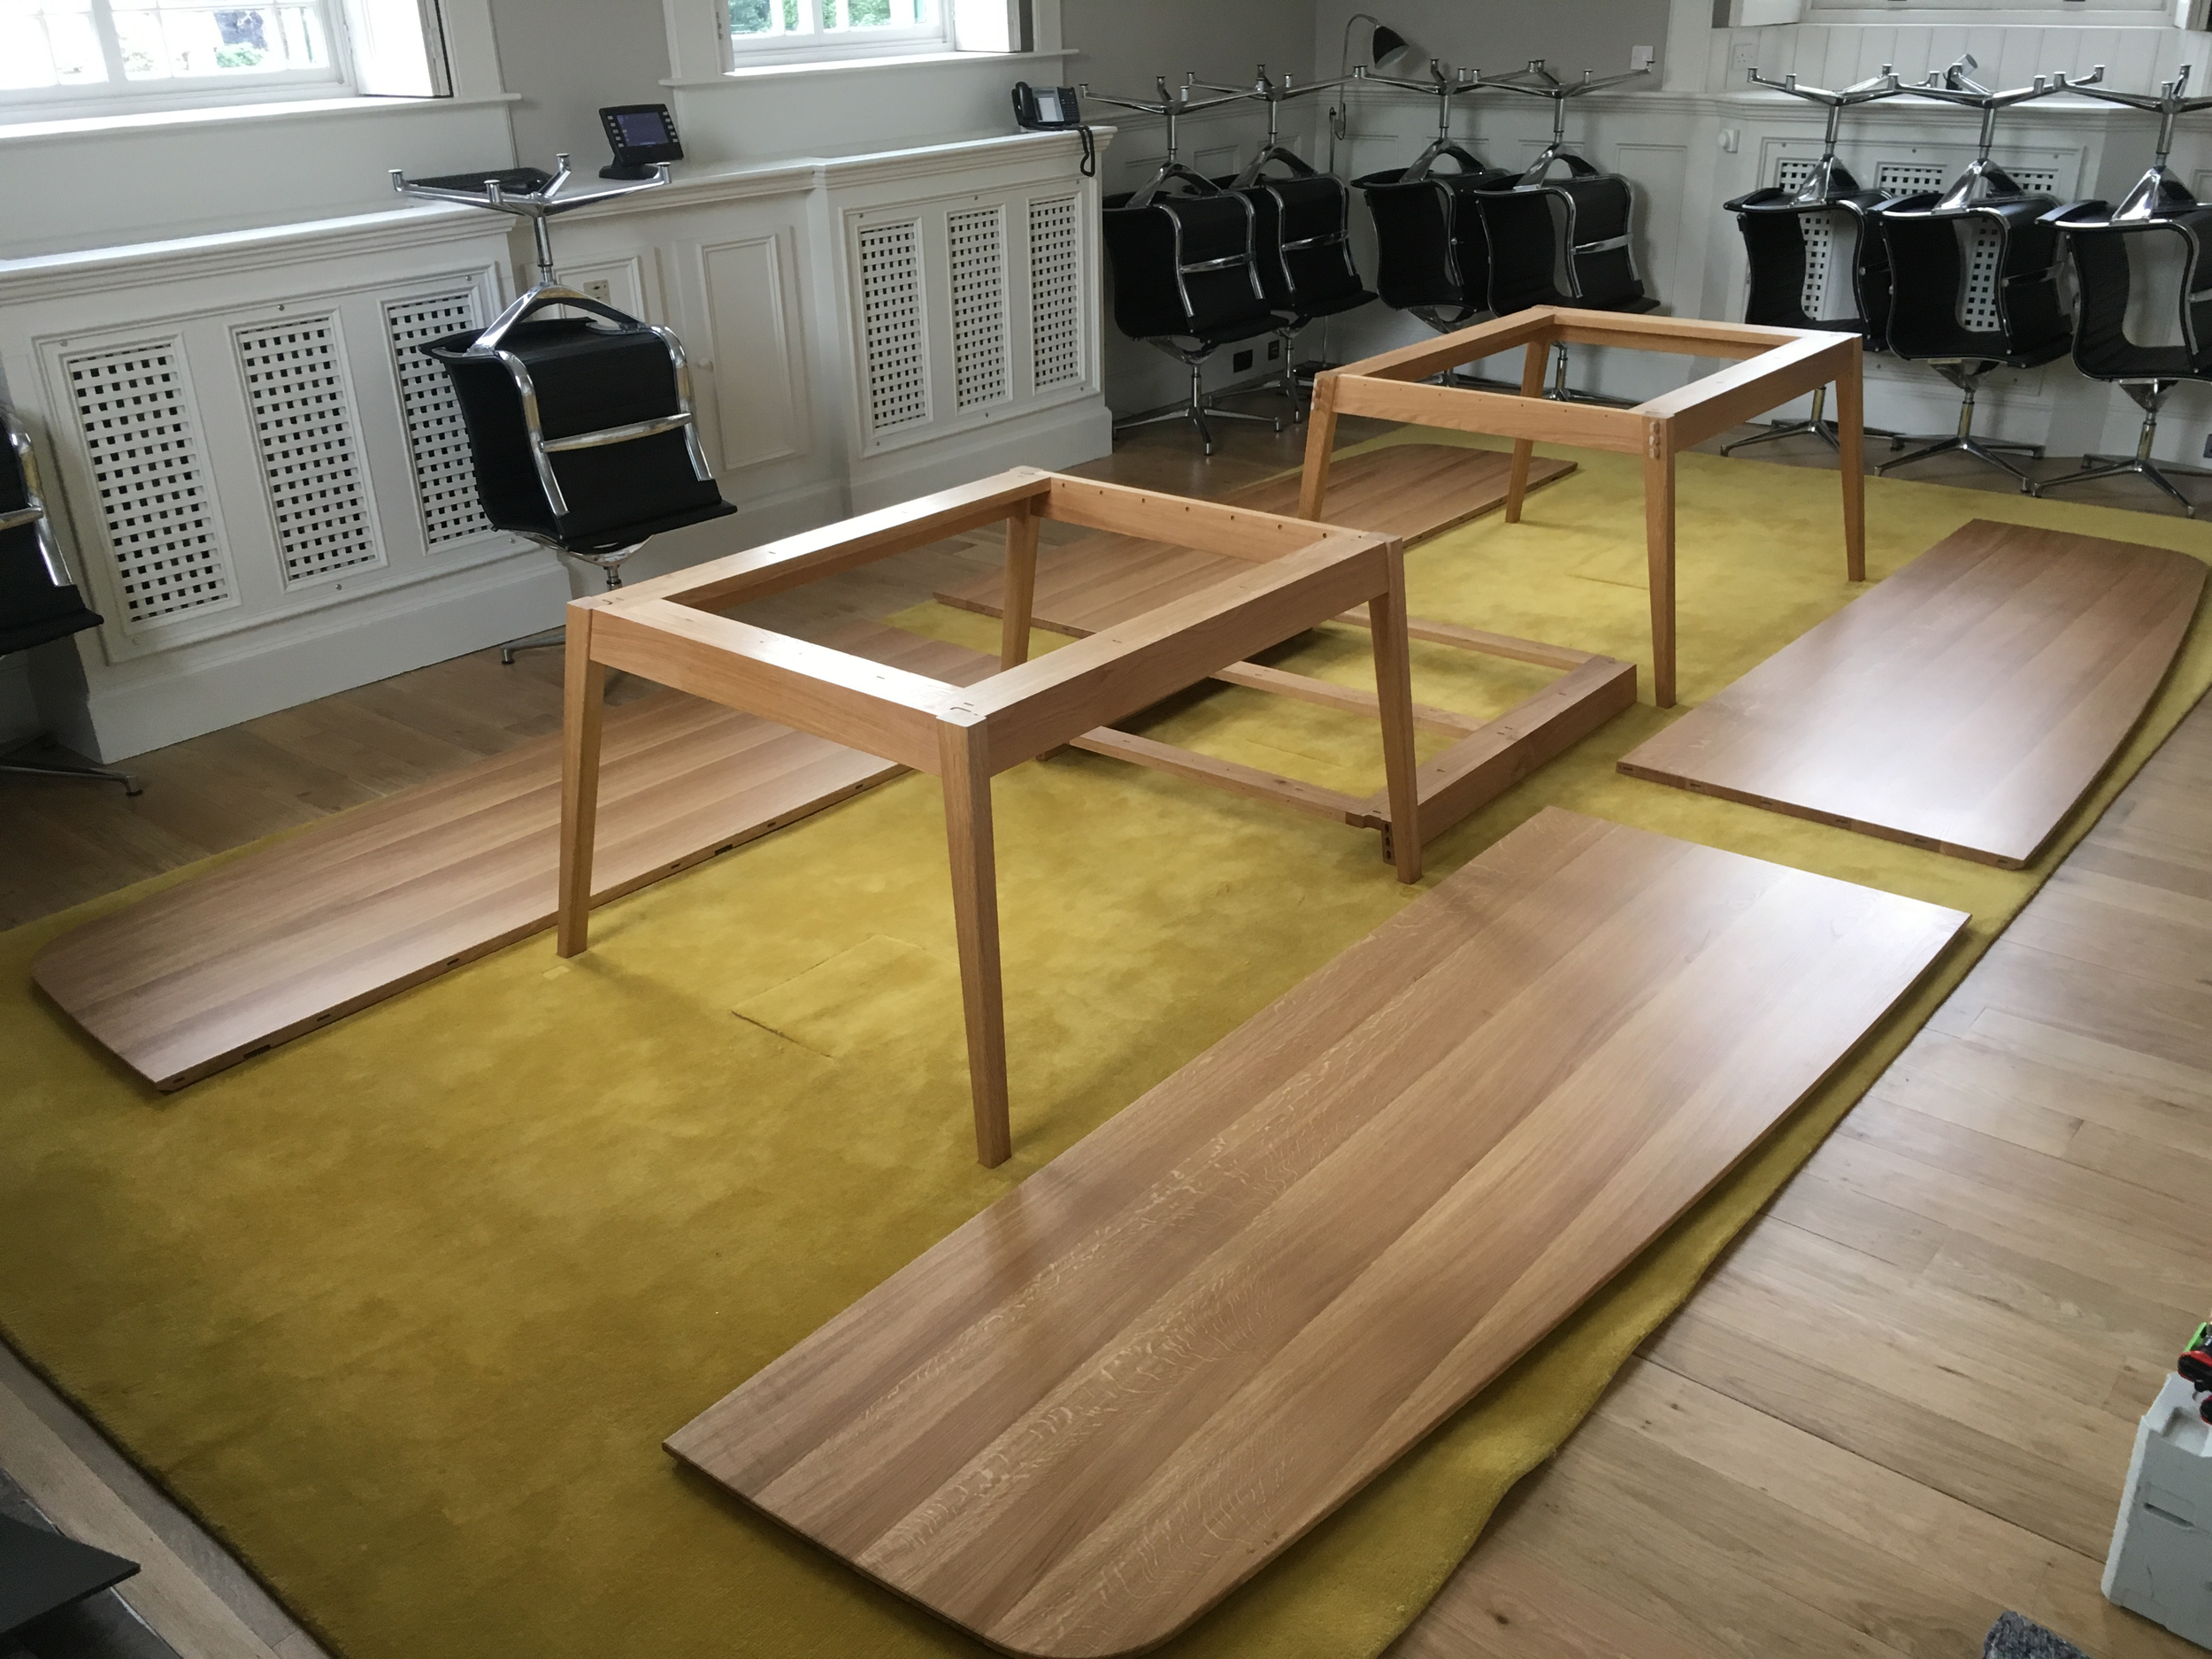 Bespoke commission for custom designed boardroom table by furniture maker Namon Gaston